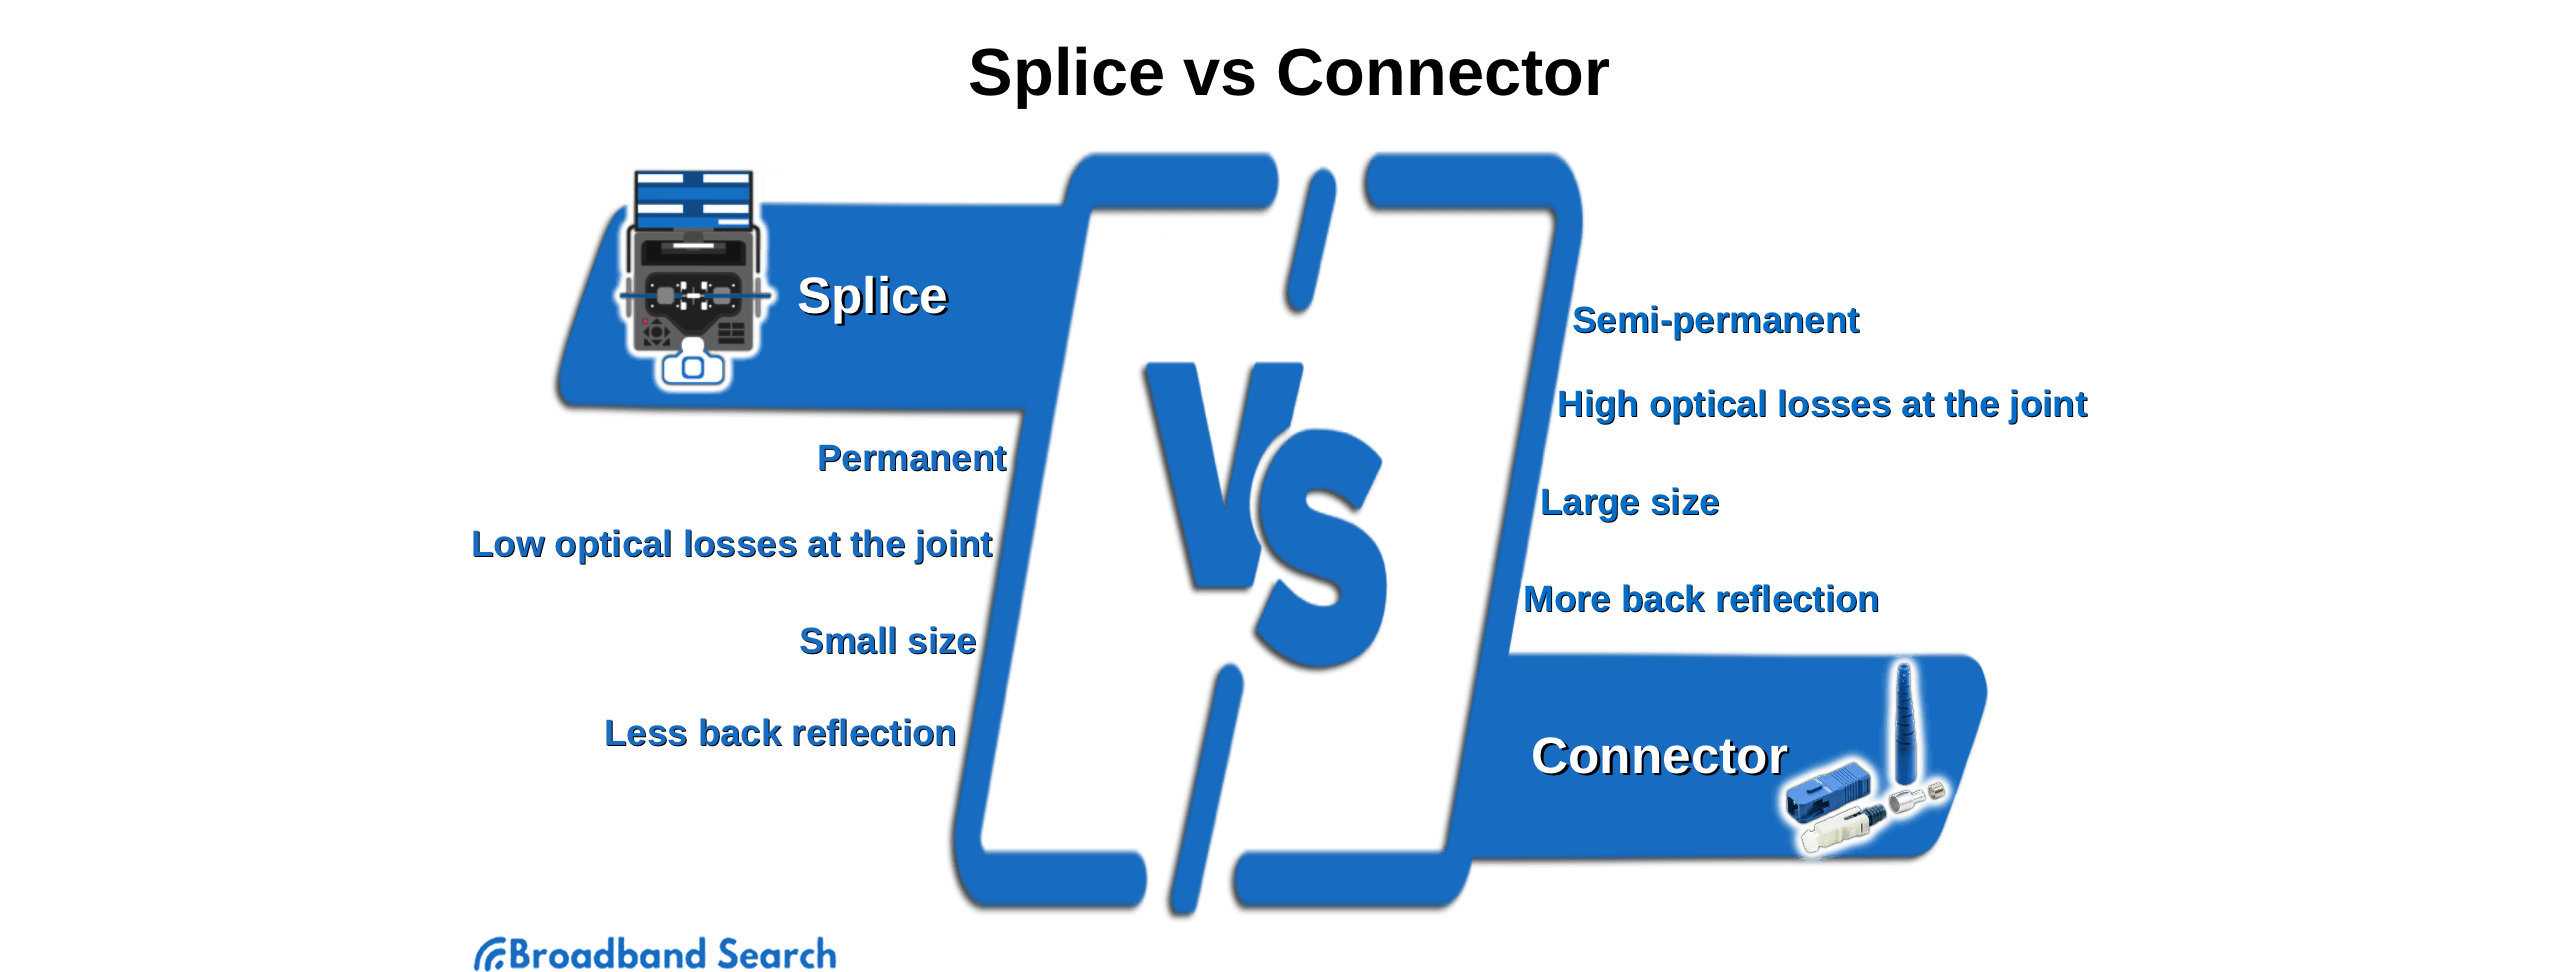 Splice vs Connector